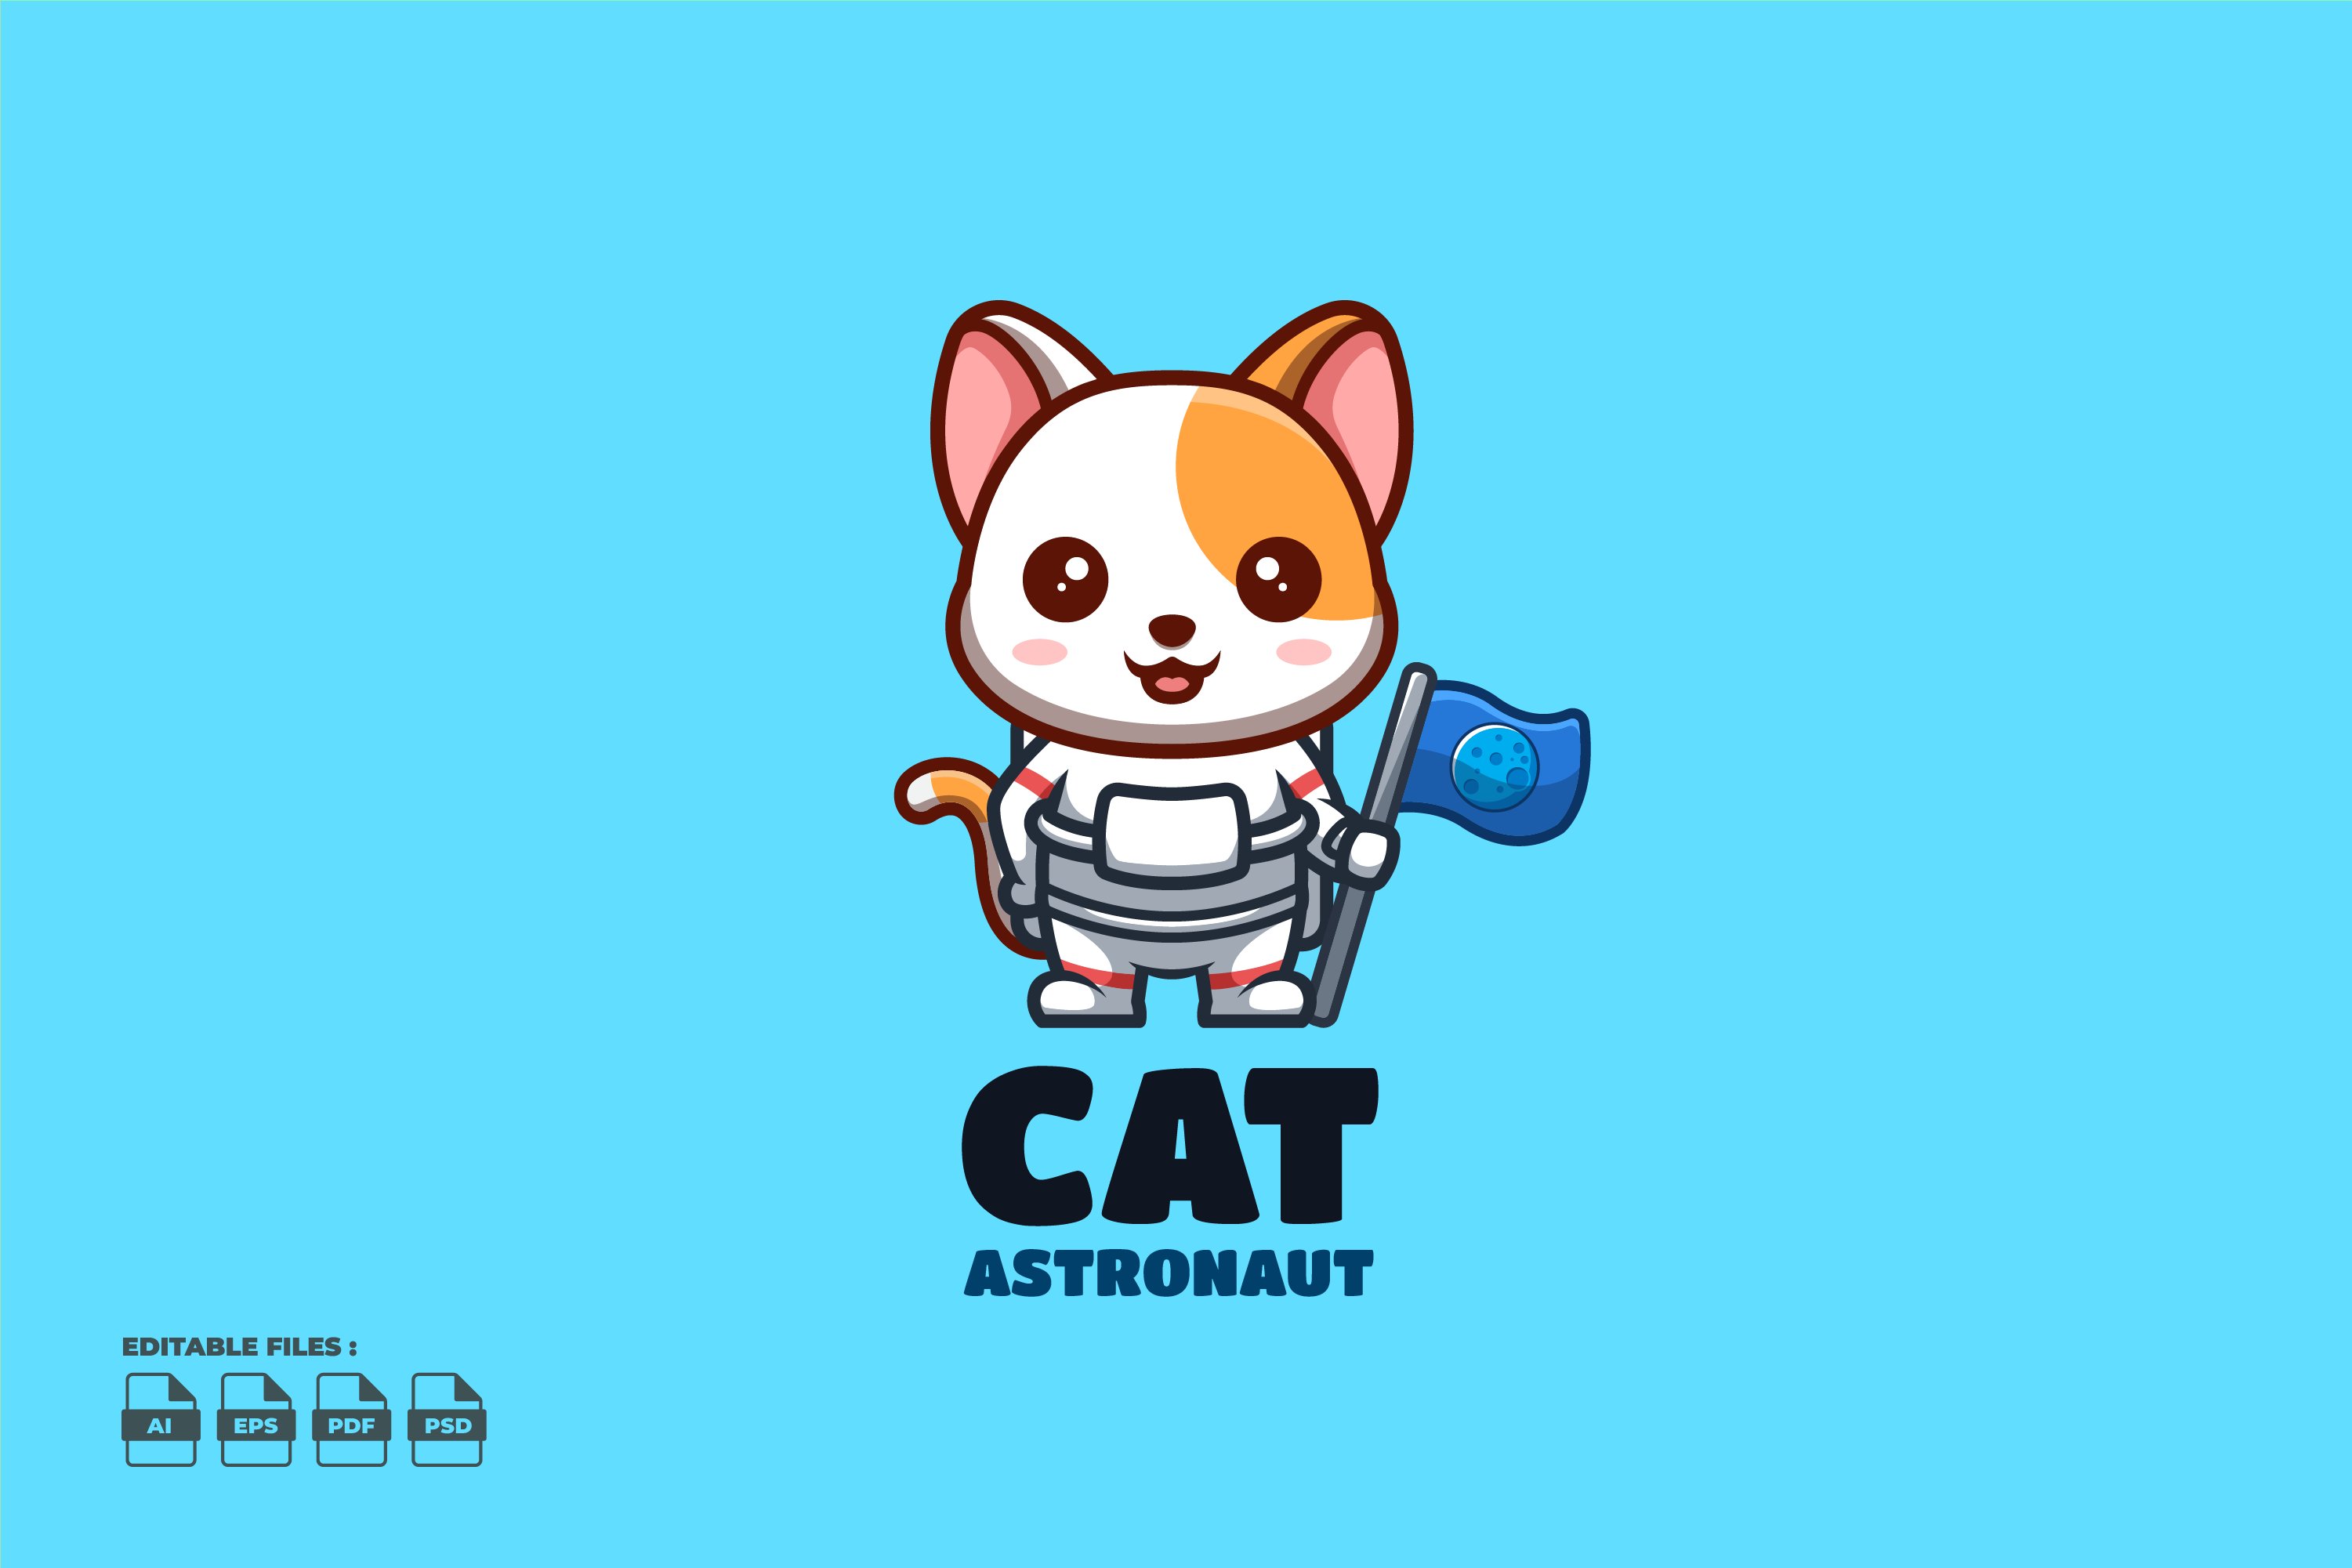 Astronaut White Cat Cute Mascot Logo cover image.